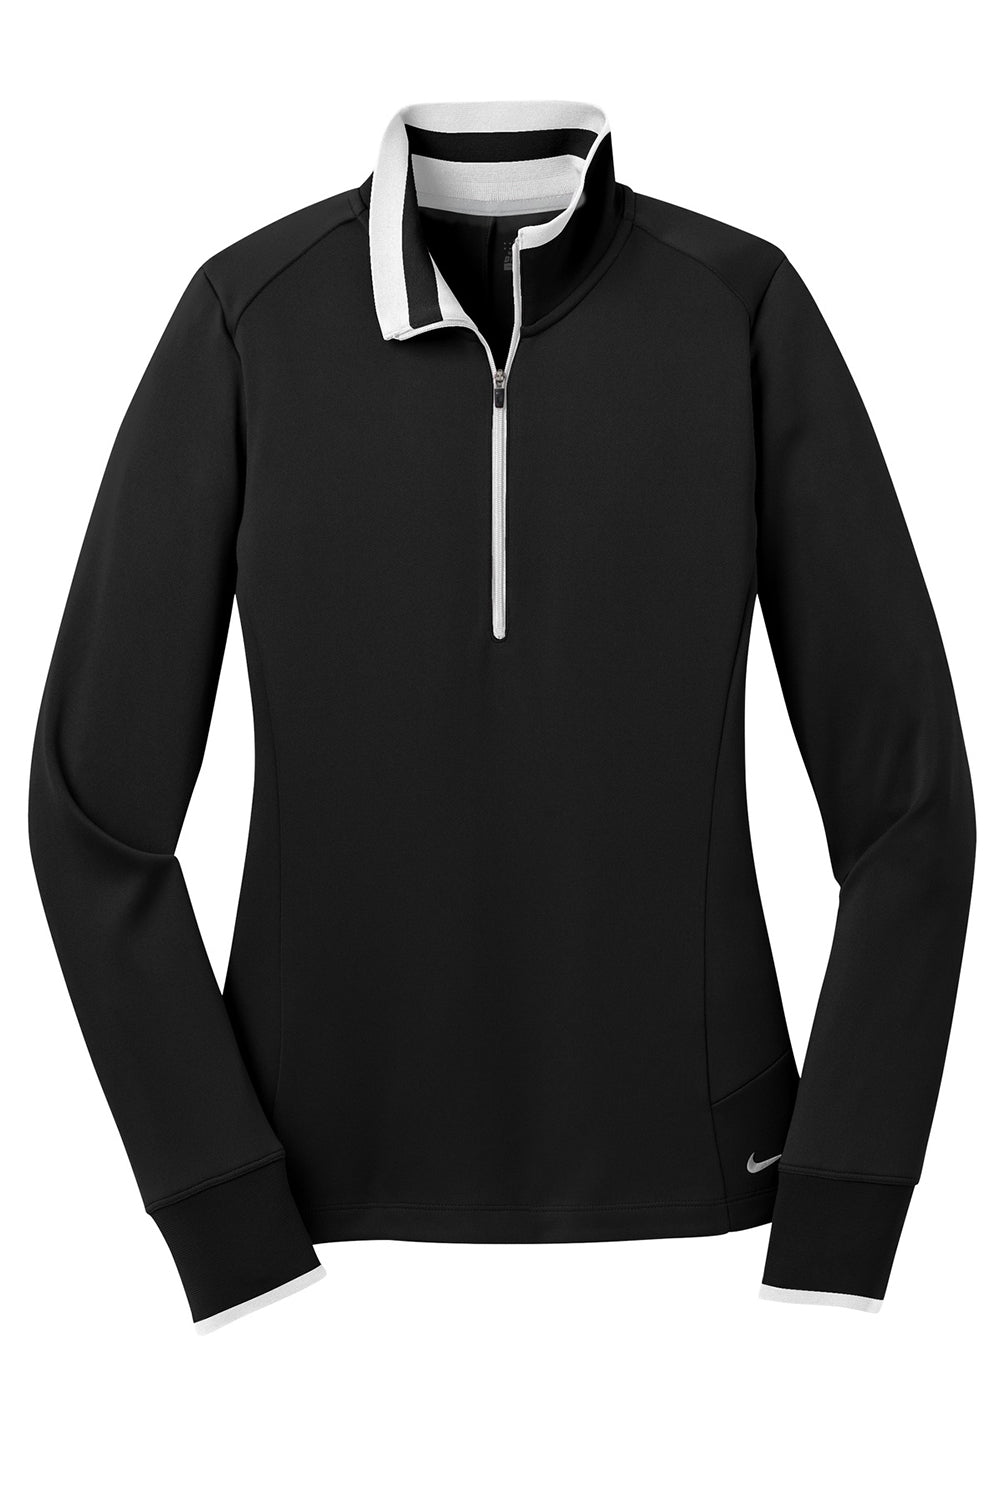 Nike 578674 Womens Dri-Fit Moisture Wicking 1/4 Zip Sweatshirt Black/White Flat Front